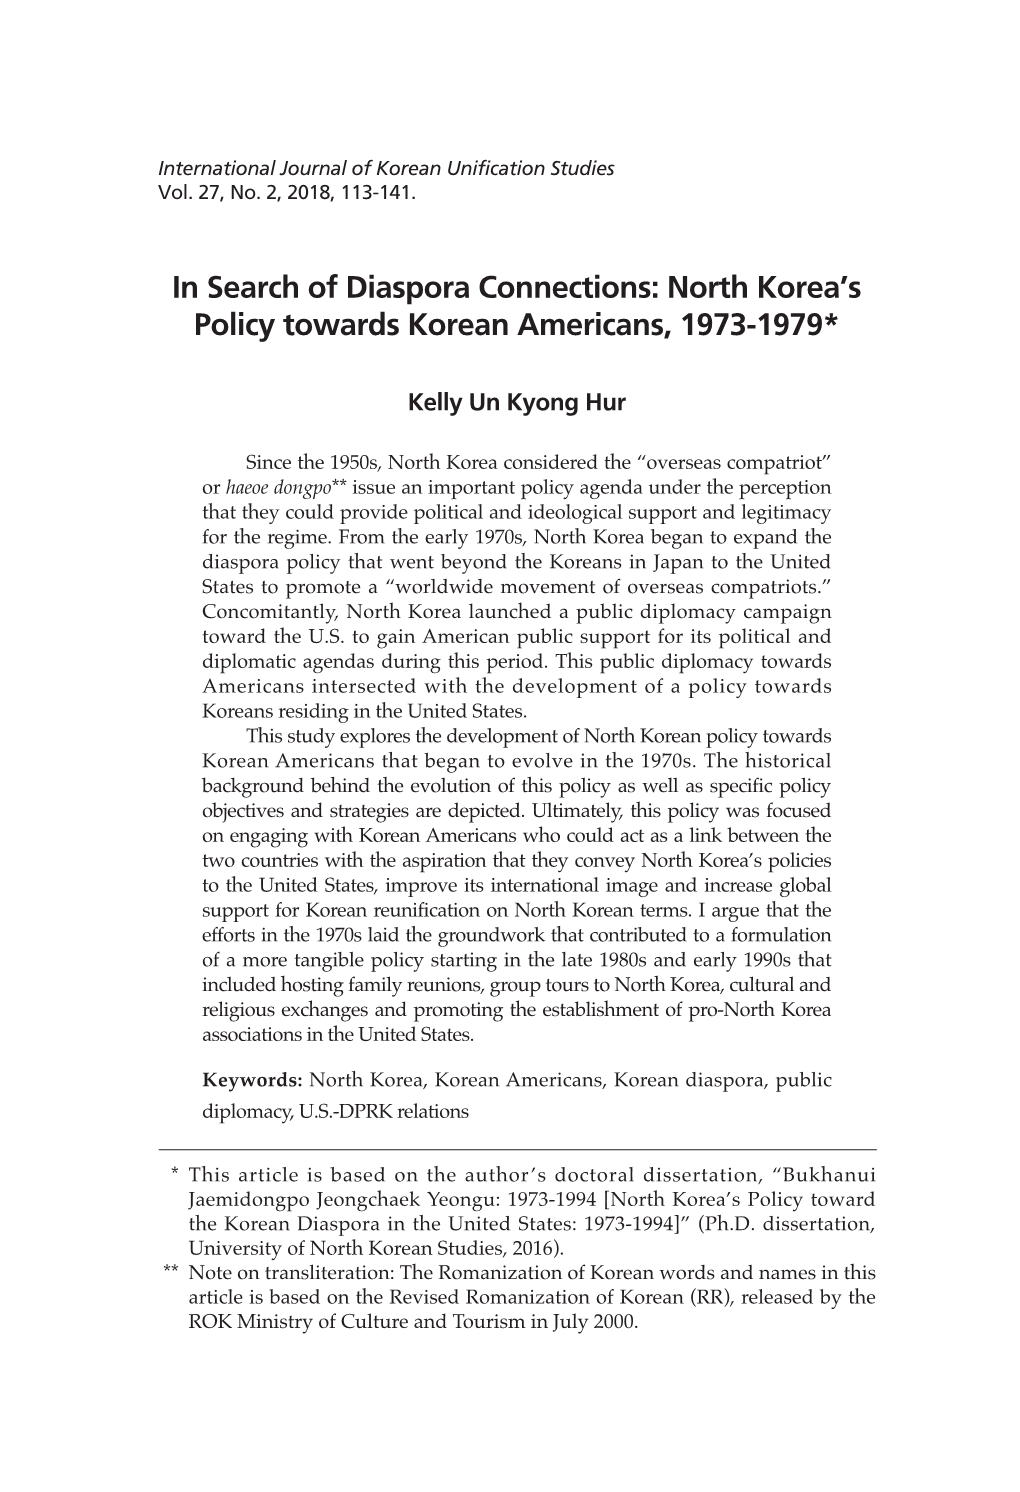 In Search of Diaspora Connections: North Korea's Policy Towards Korean Americans, 1973-1979*